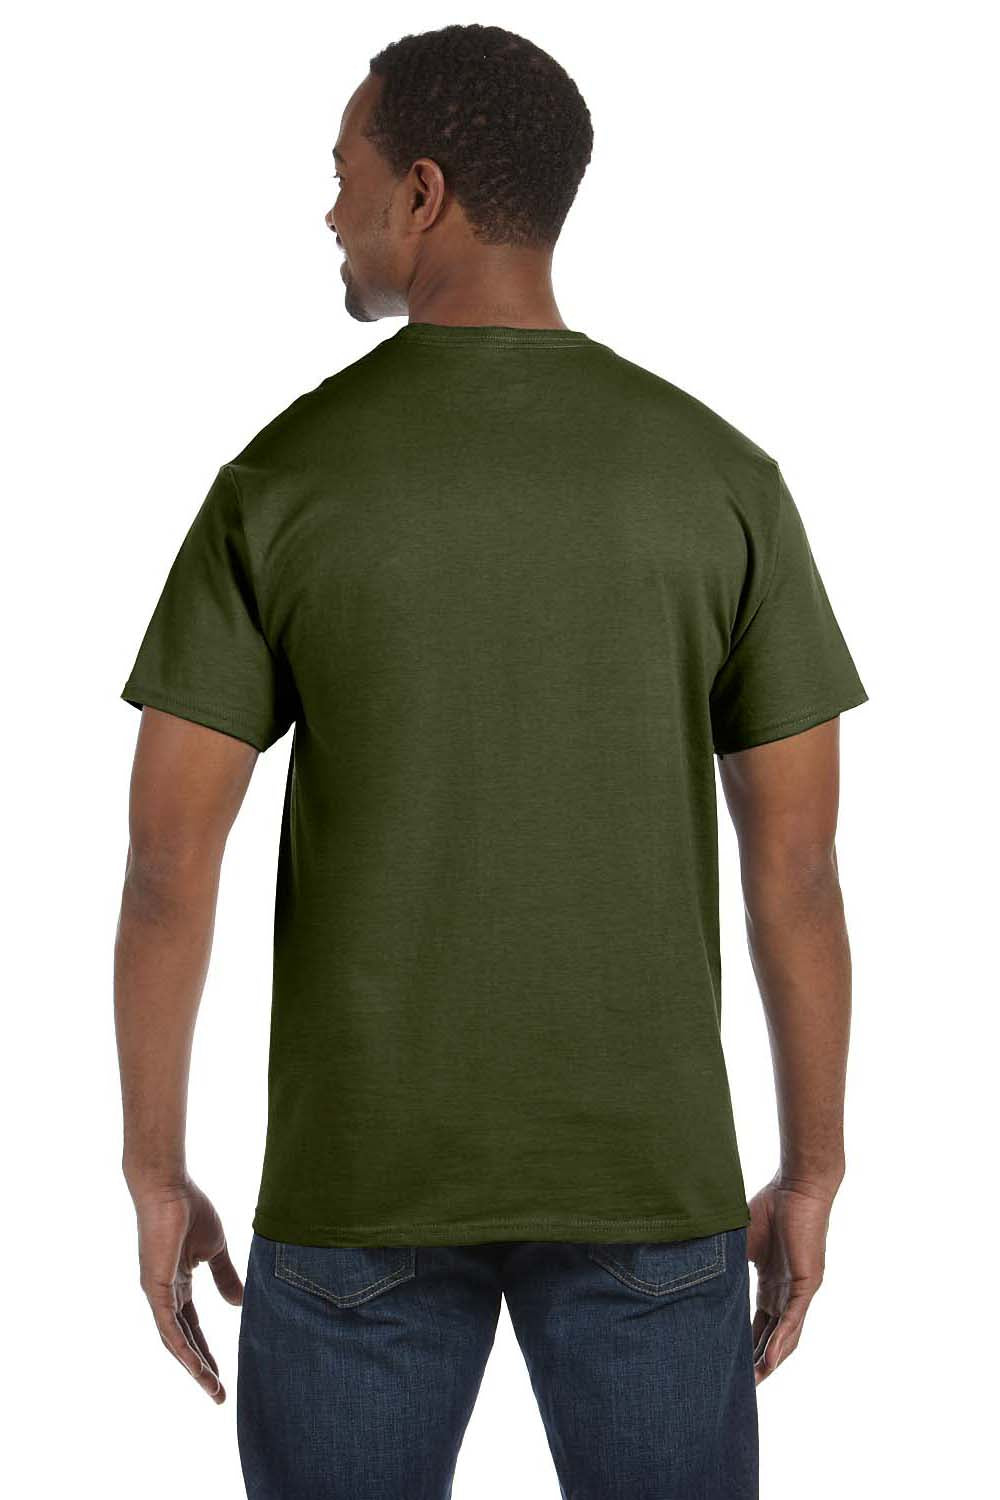 Jerzees 29M Mens Dri-Power Moisture Wicking Short Sleeve Crewneck T-Shirt Military Green Back